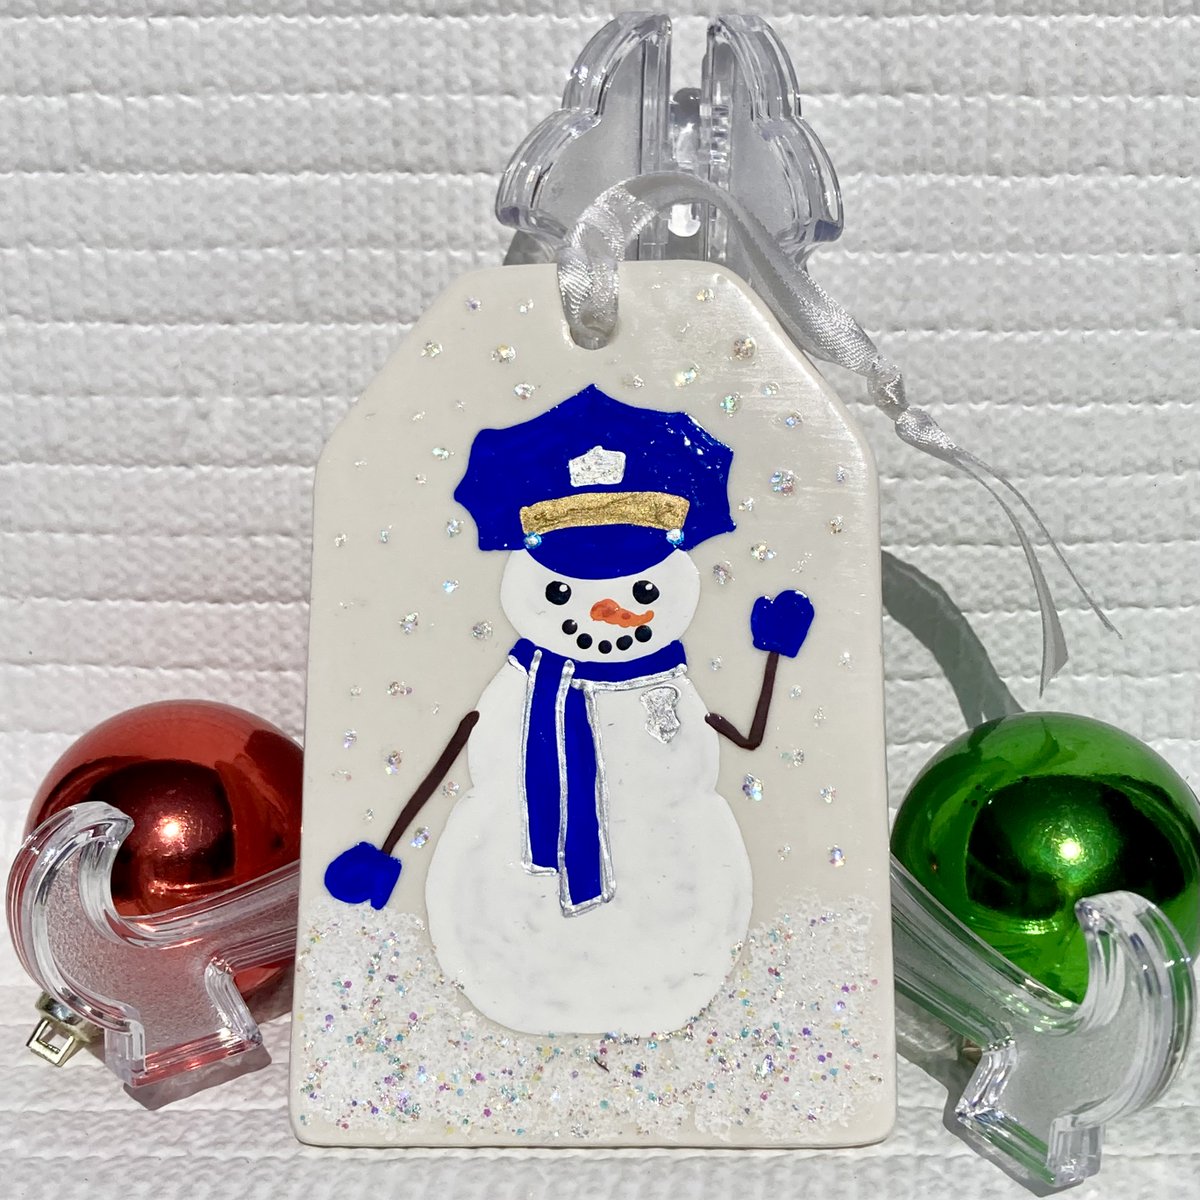 Graet stocking stuffer for your favorite cop etsy.com/listing/157120… #snowmancop #snowmanornament #ceramicornament #SMILEtt23 #handpaintedornament #christmasornament #stockingstuffer